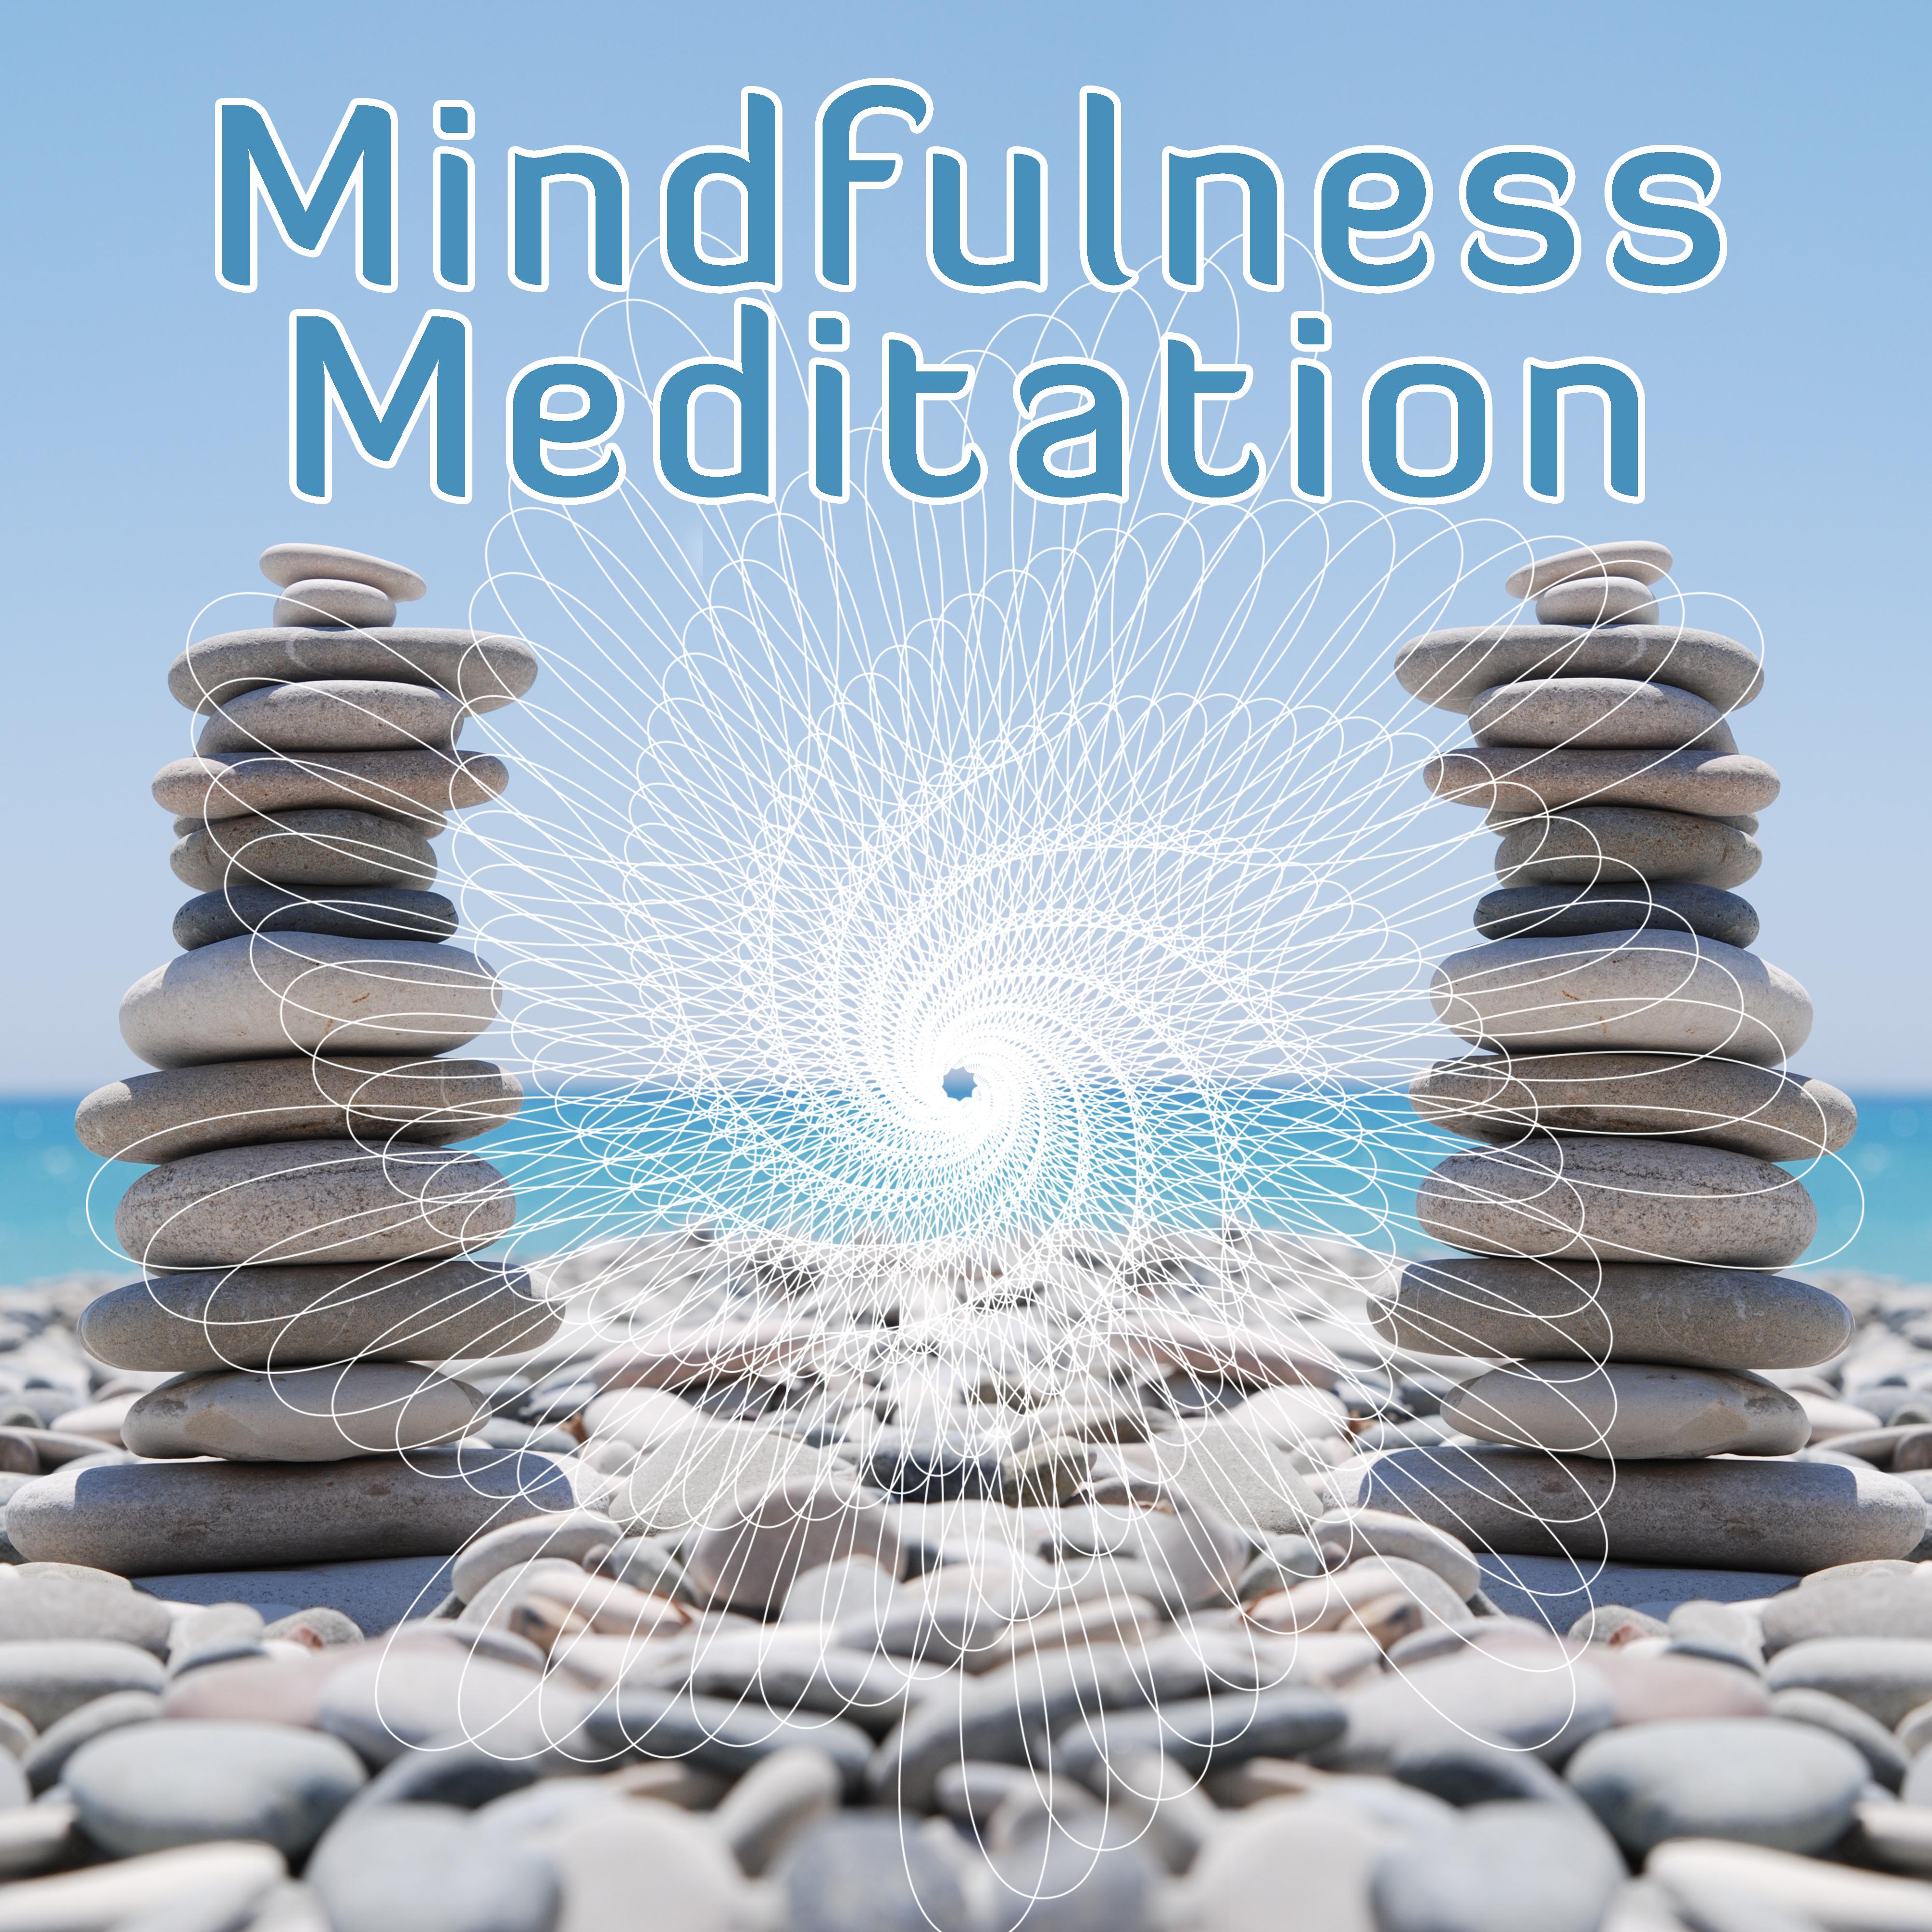 Mindfulness Meditation – Training Yoga, Chakra Balancing, Meditate, Nature Sounds to Calm Down, Relaxation